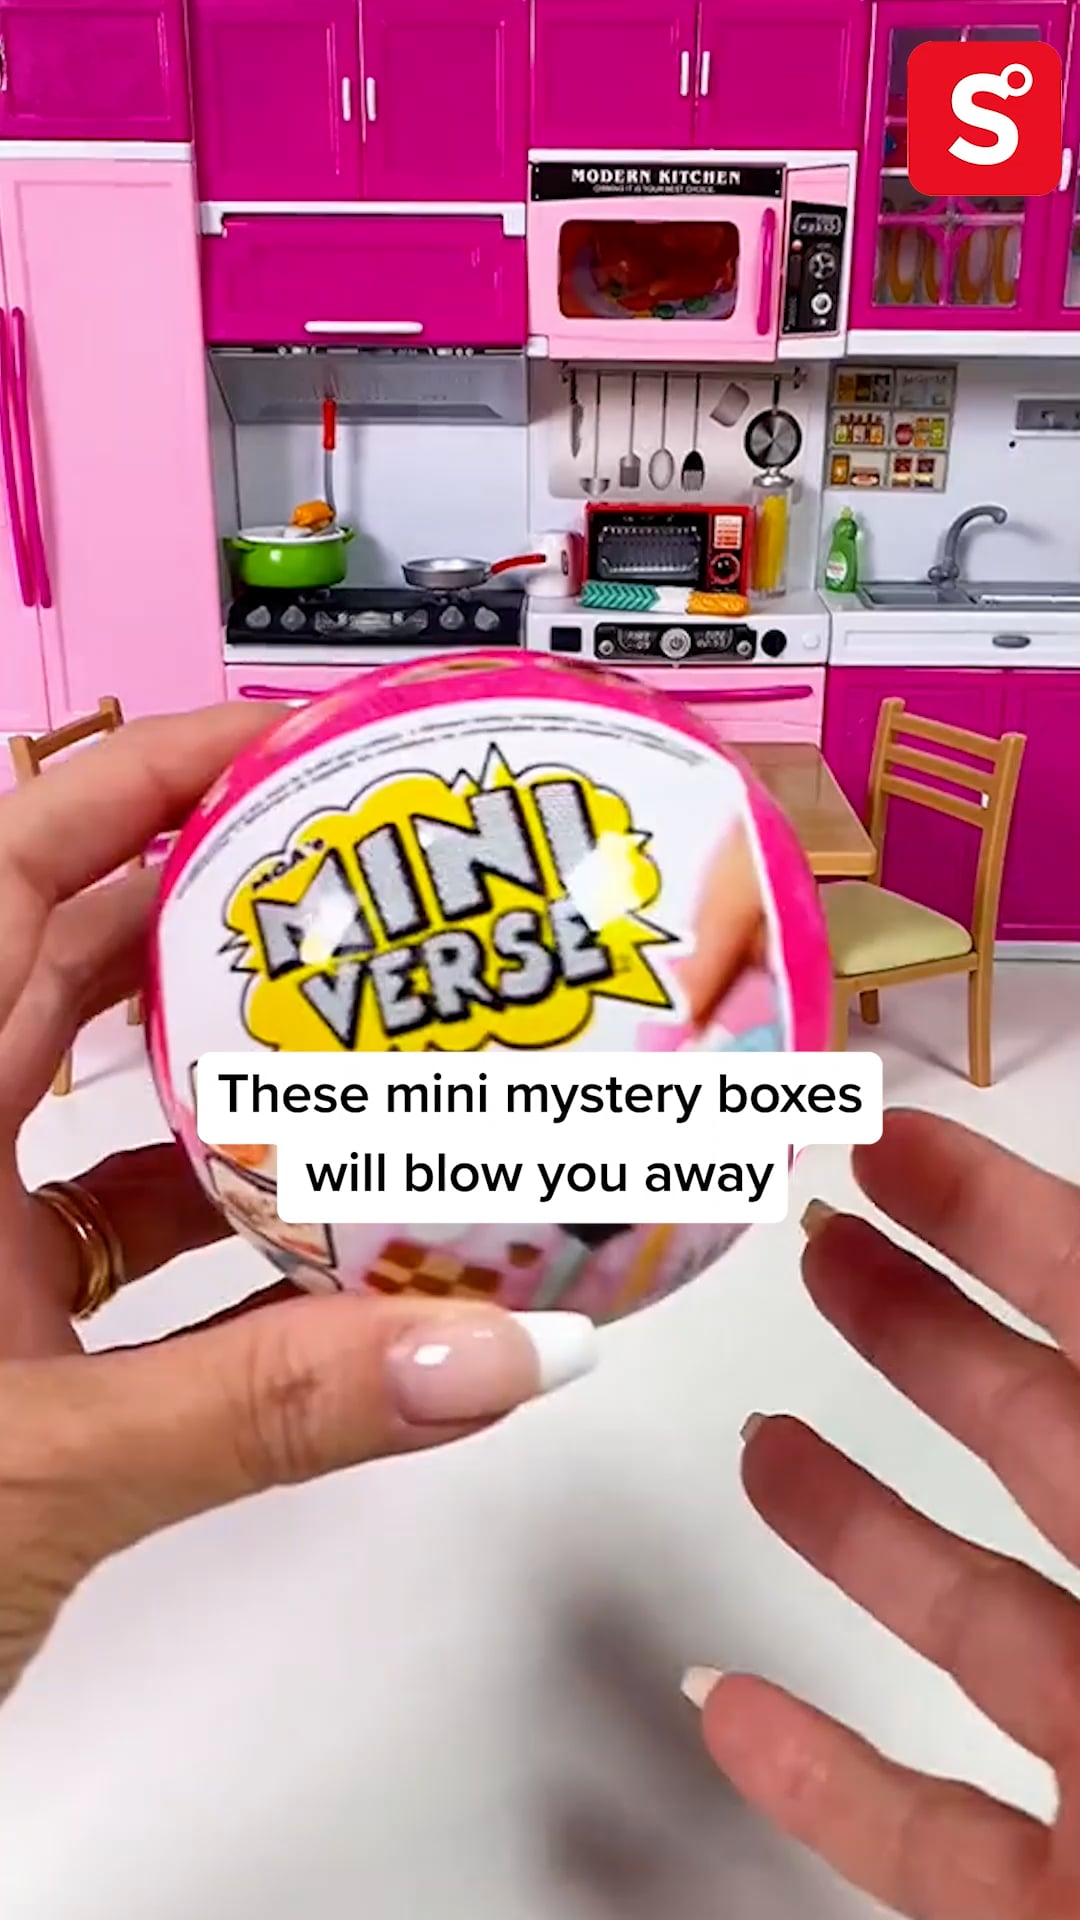 Mini Verse: Make It Mini Food Diner Series 2 by MGA #591825C3